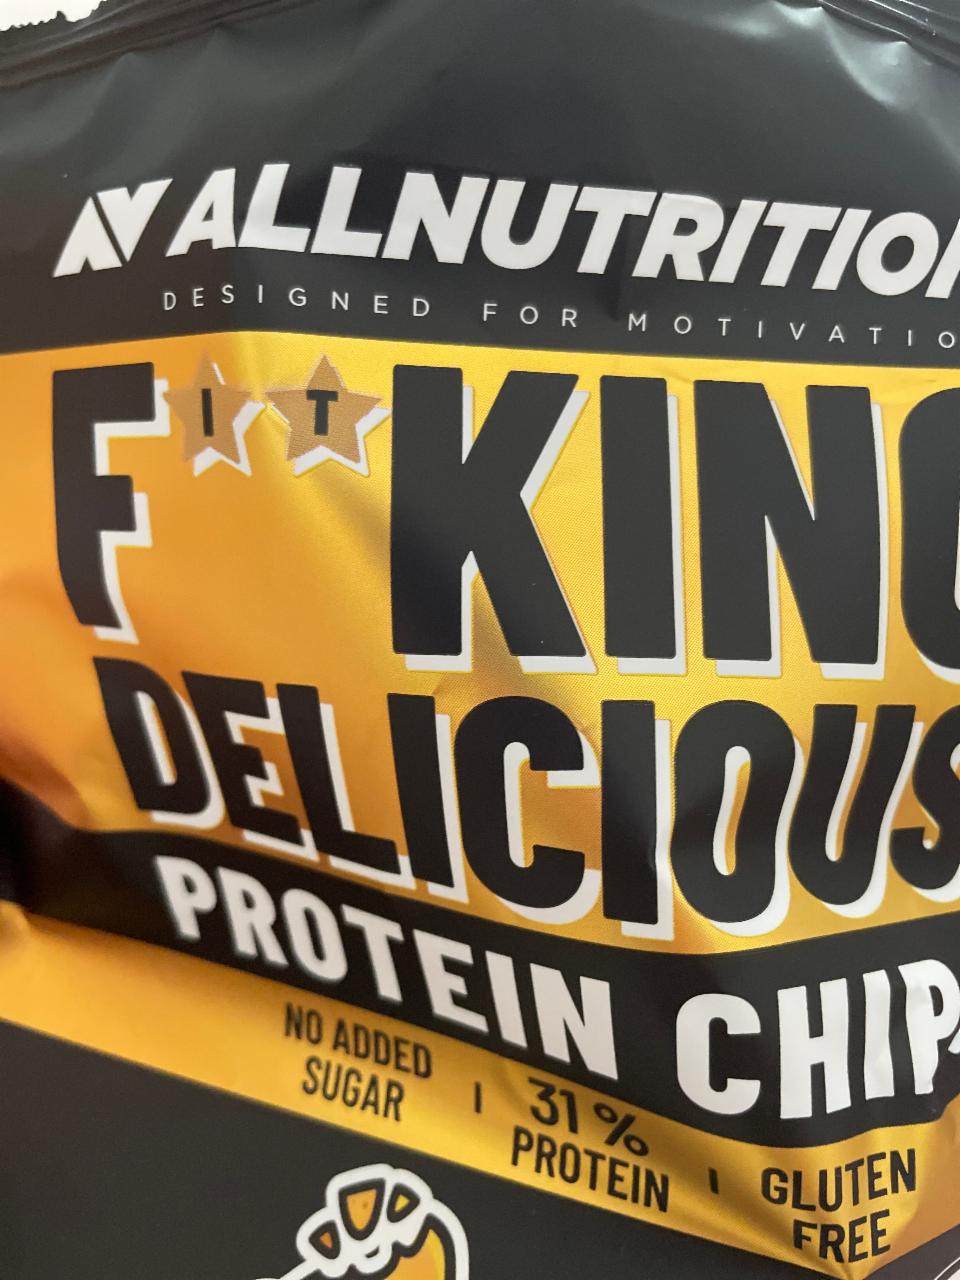 Фото - протеиновые чипсы без сахара и глютена со вкусом сыра и лука F**king Delicious Allnutrition